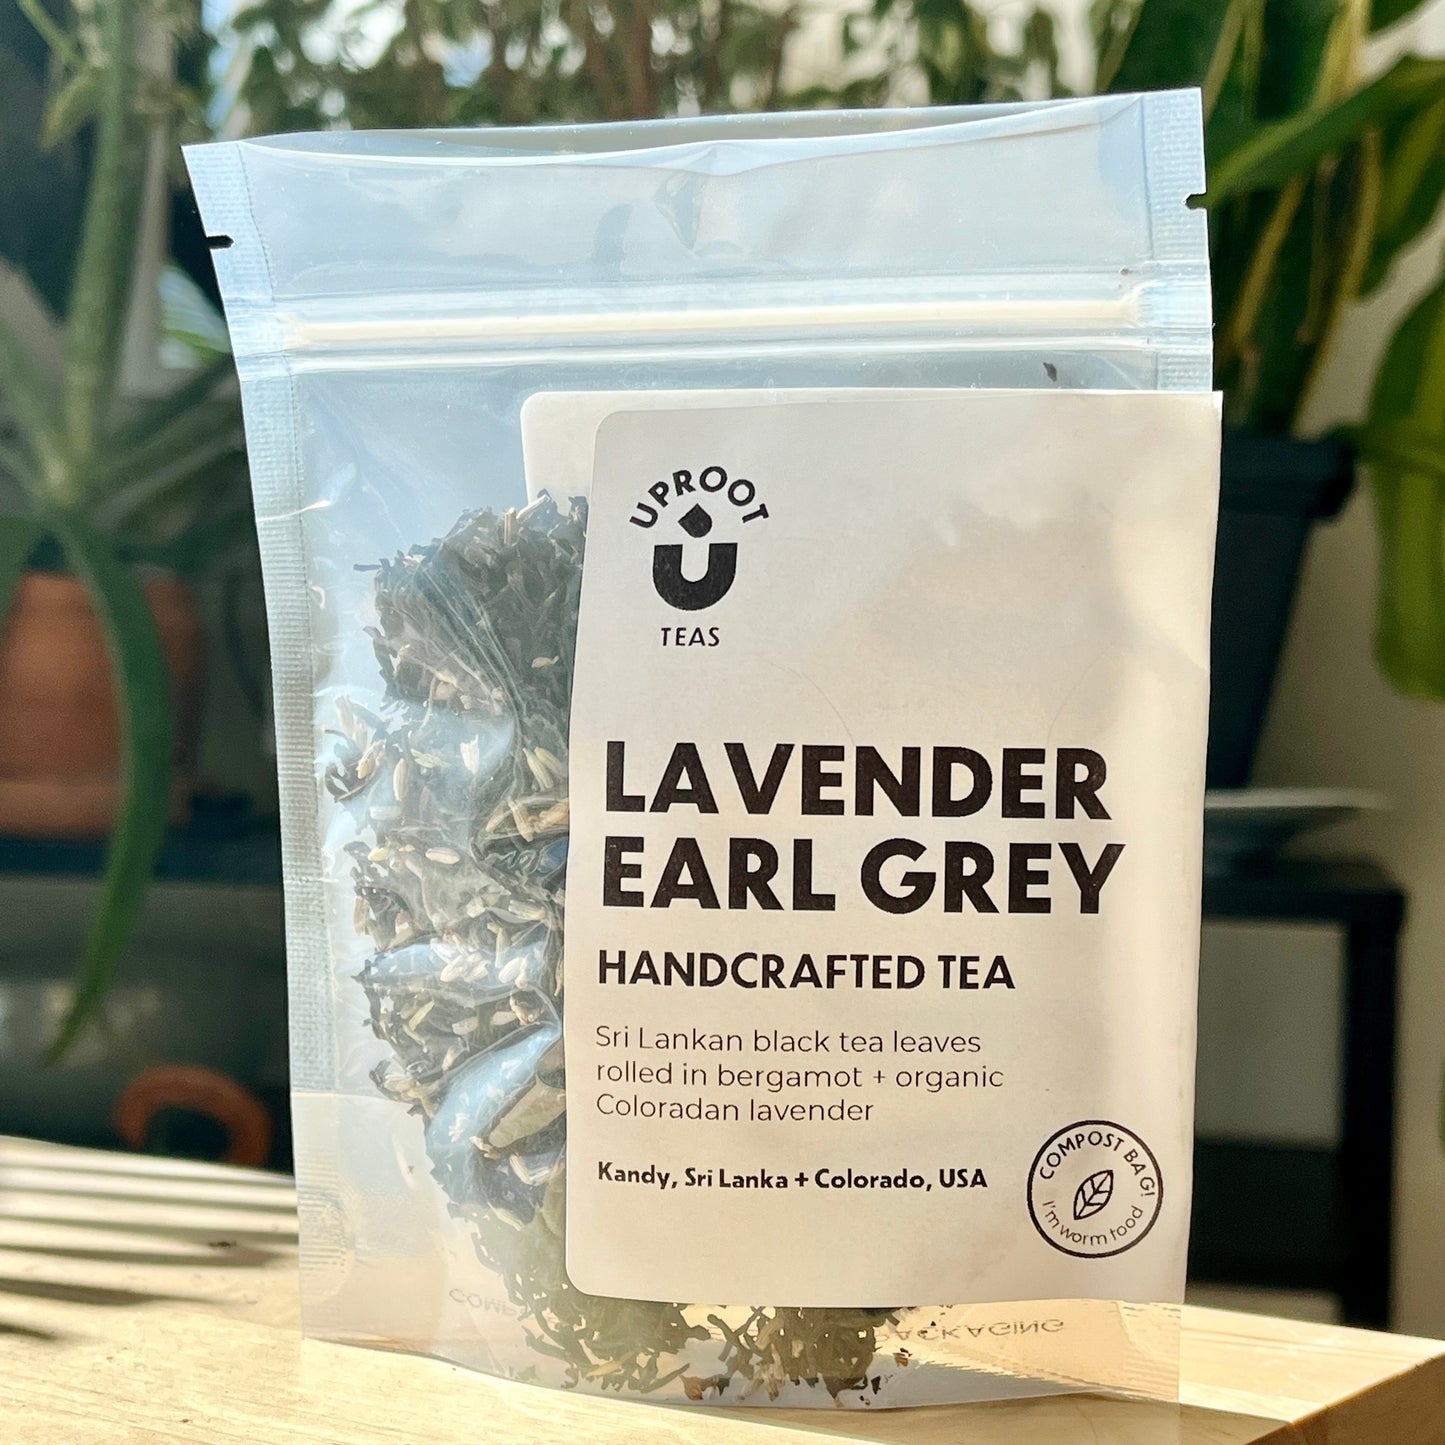 Uproot Teas Sri Lankan Earl Grey Tea + Colorado Lavender - Limited Batch